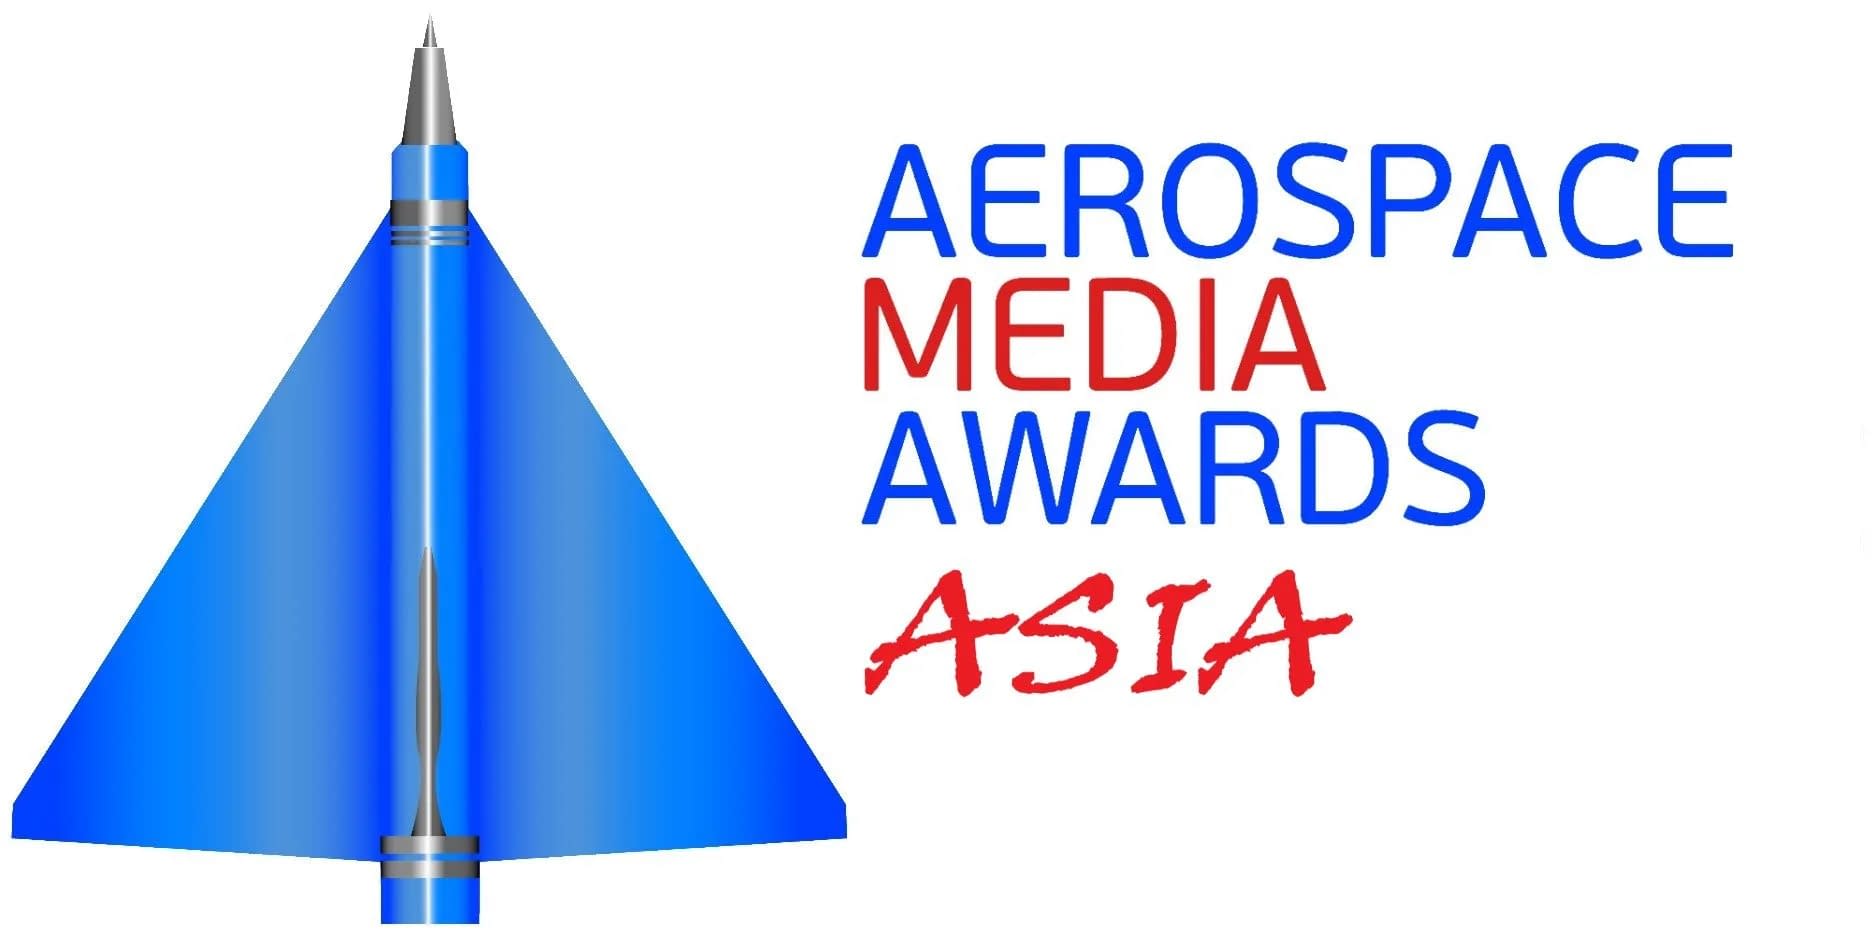 GBP Aerospace & Defence Wins Two 2022 Aerospace Media Awards ASIA Awards